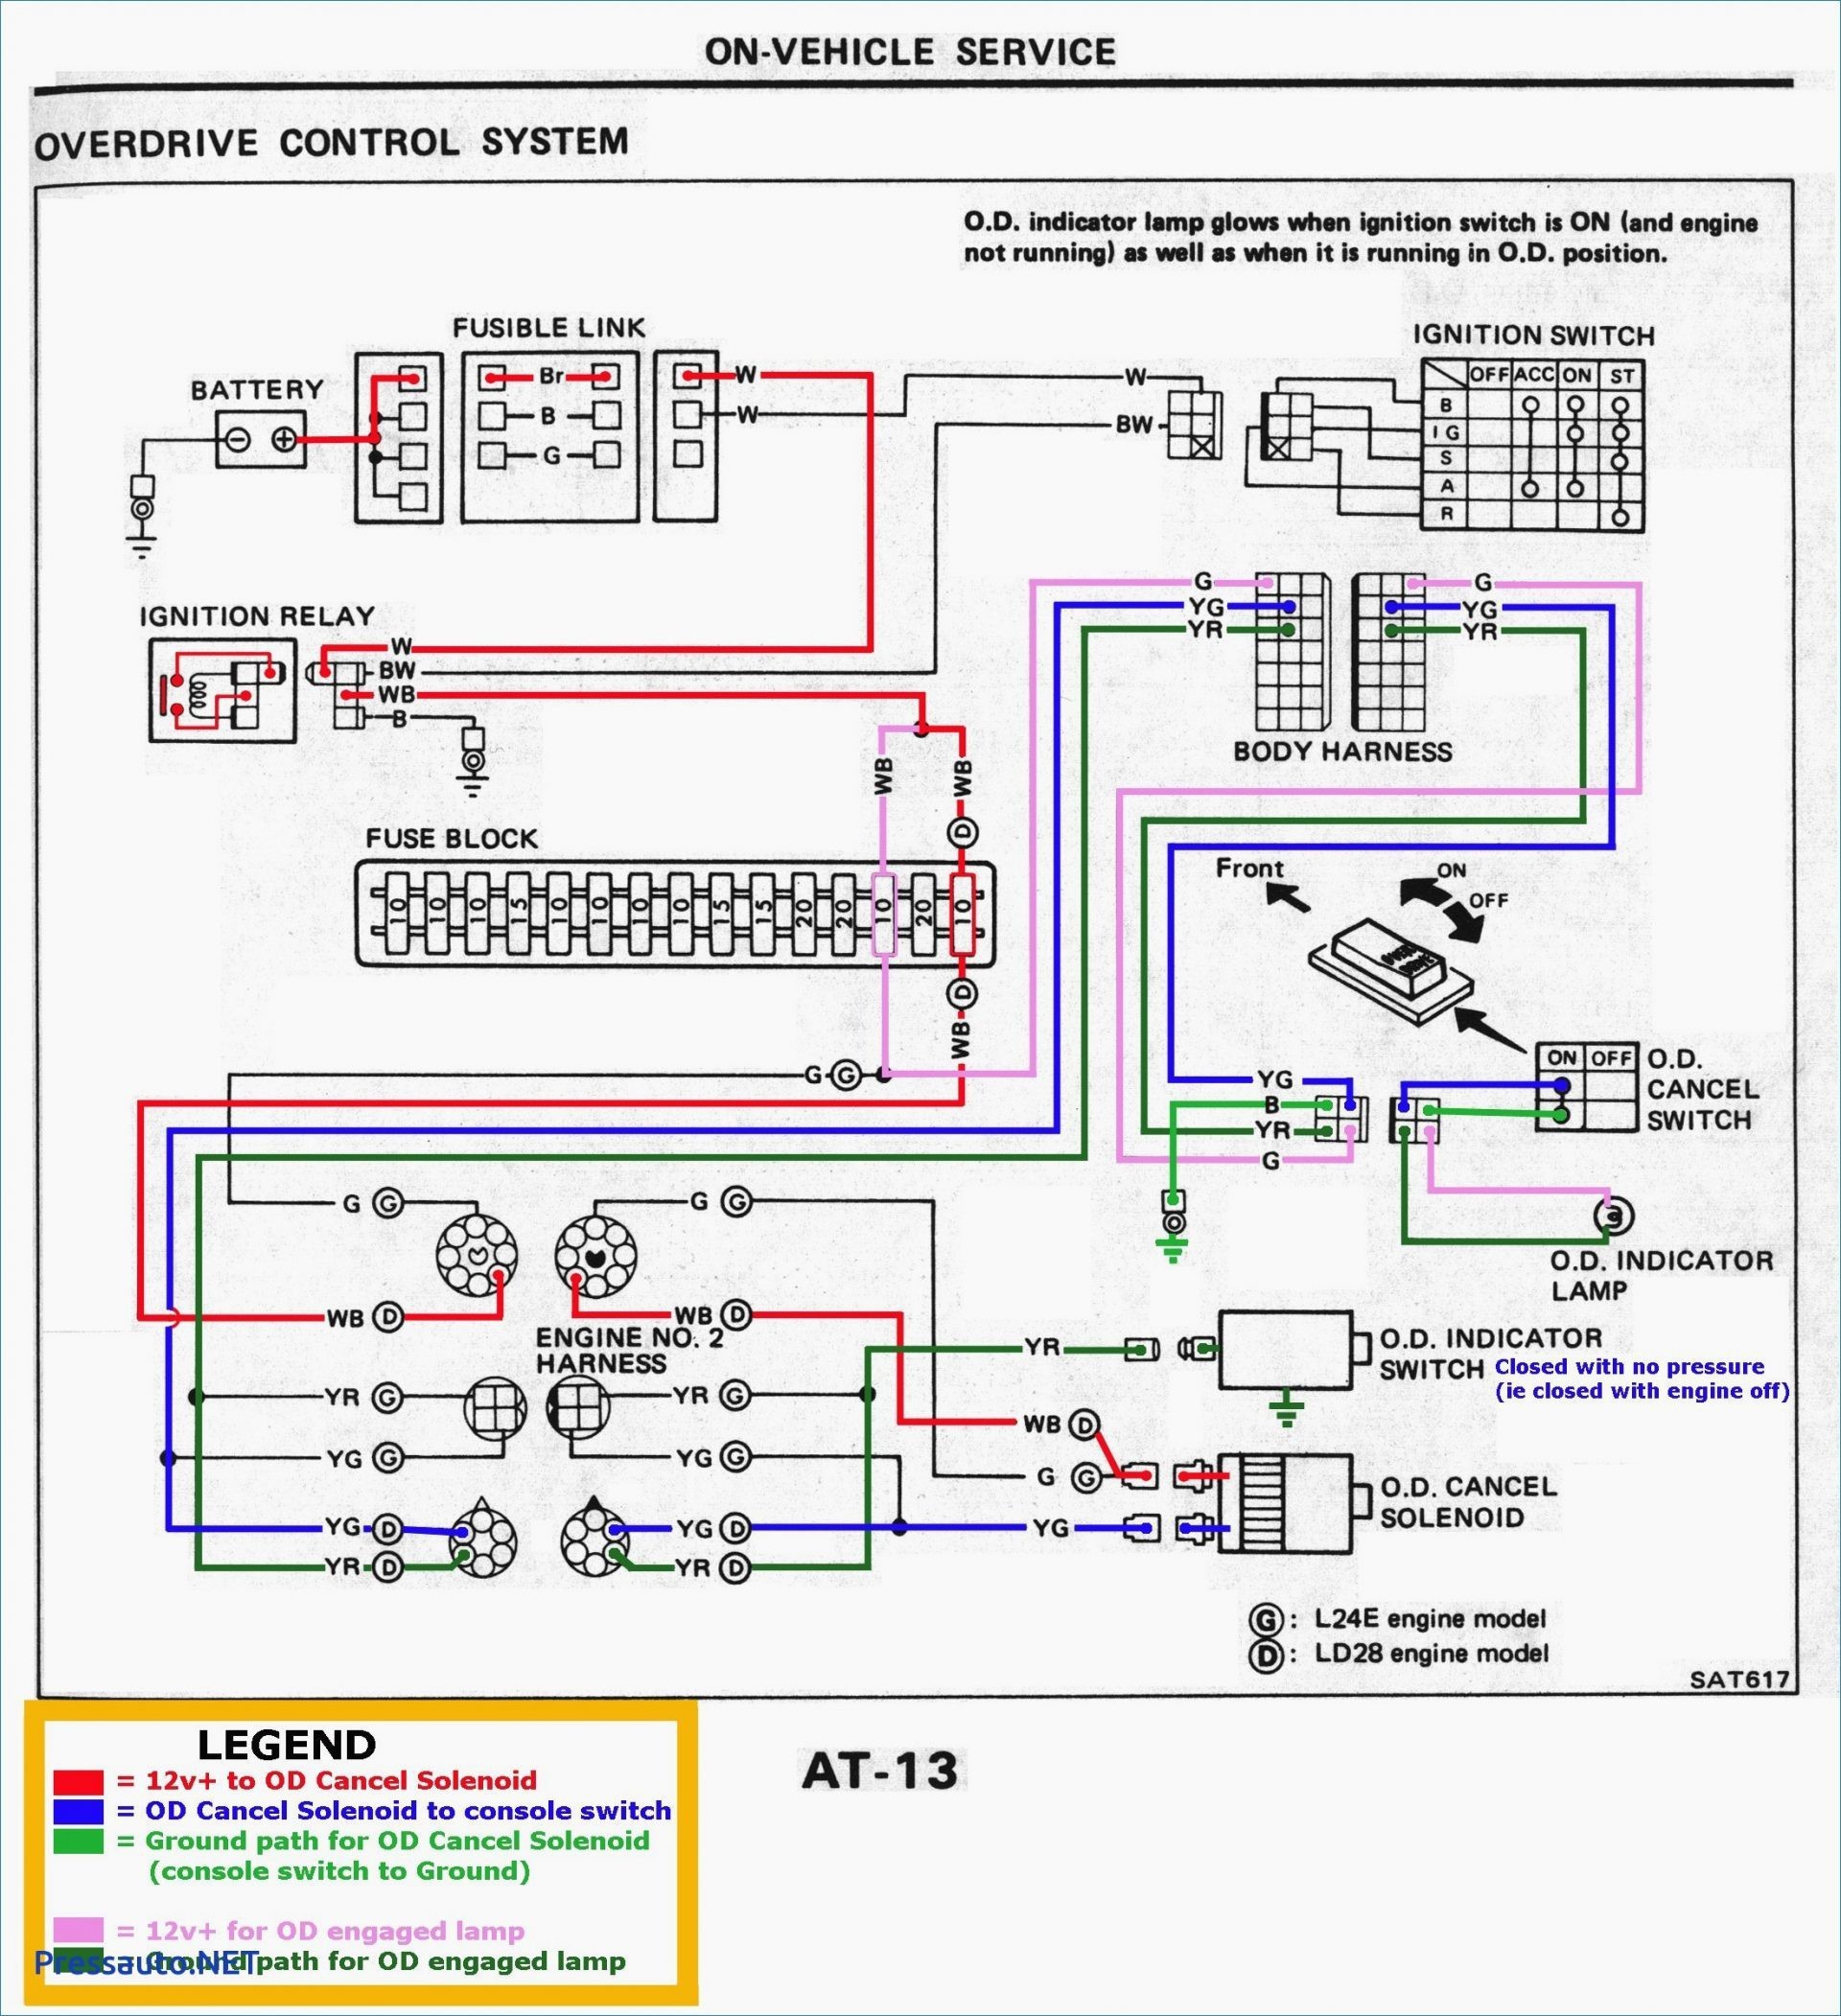 Honeywell Fan Limit Switch Wiring Diagram Wiring Diagram Garbage Disposal Switch Fresh Wiring Diagram ashdown Of Honeywell Fan Limit Switch Wiring Diagram